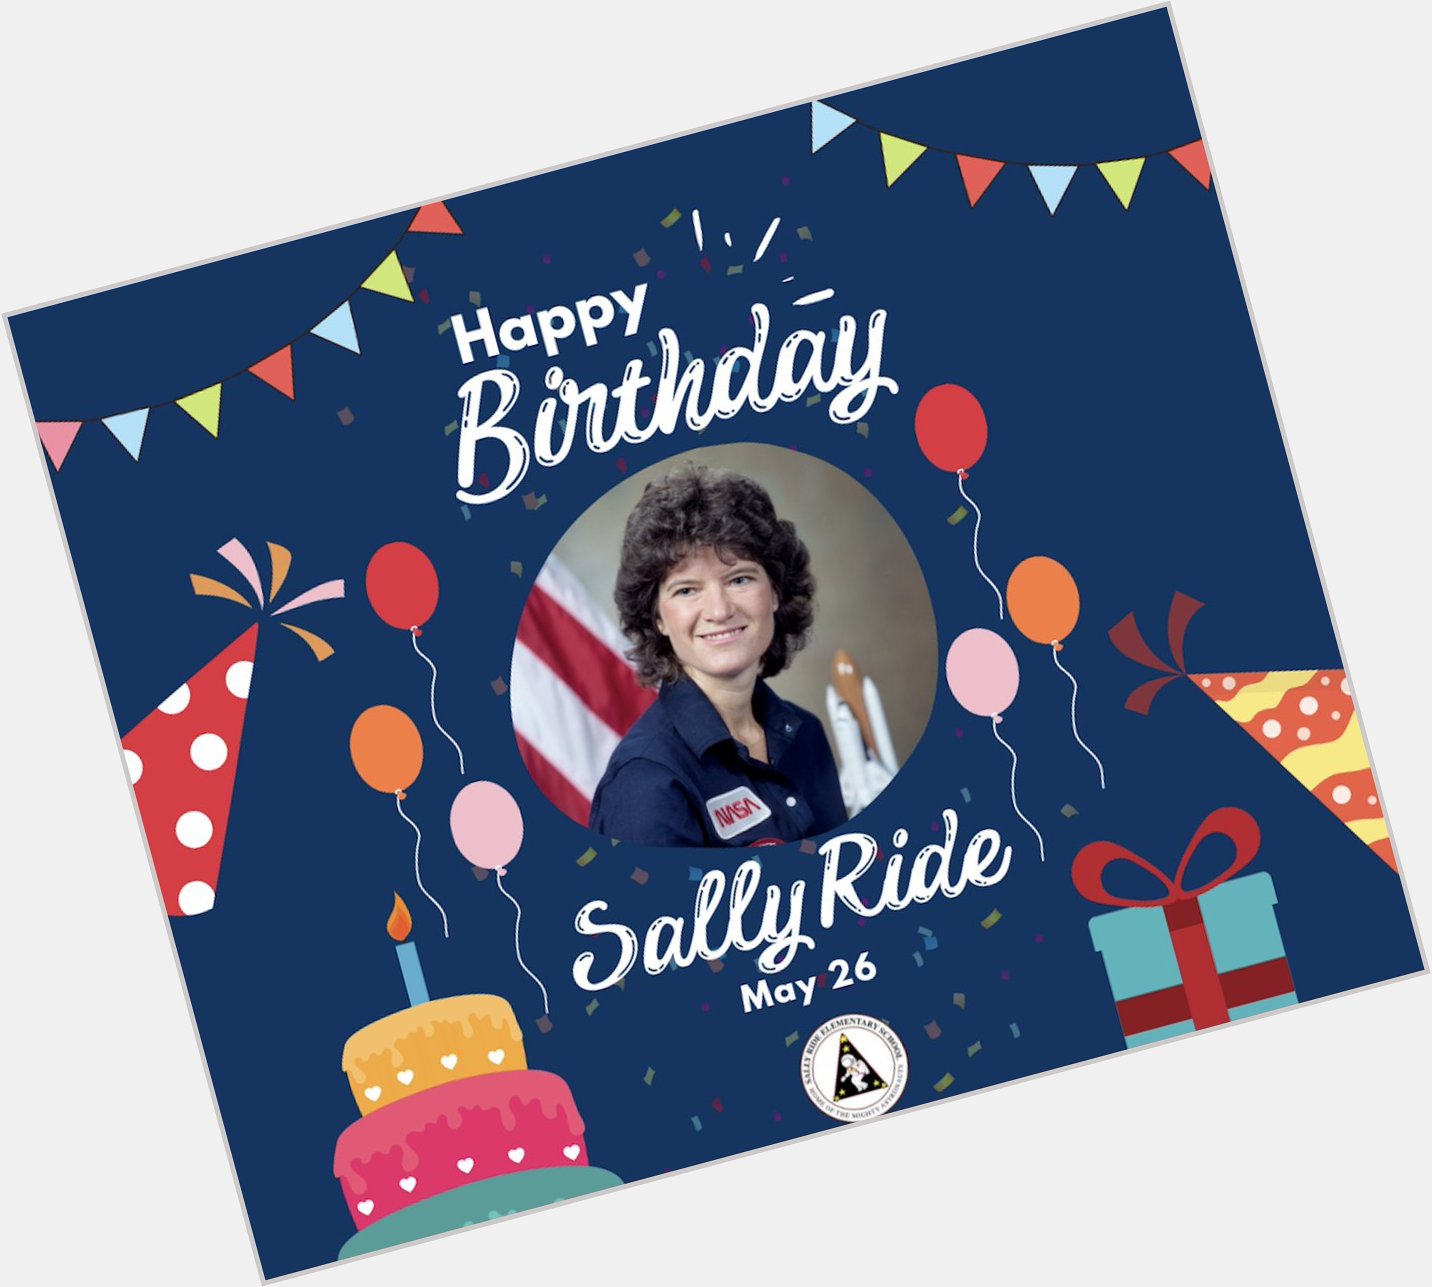 Happy Birthday Sally Ride!
*****
¡Feliz Cumpleaños Sally Ride!

 